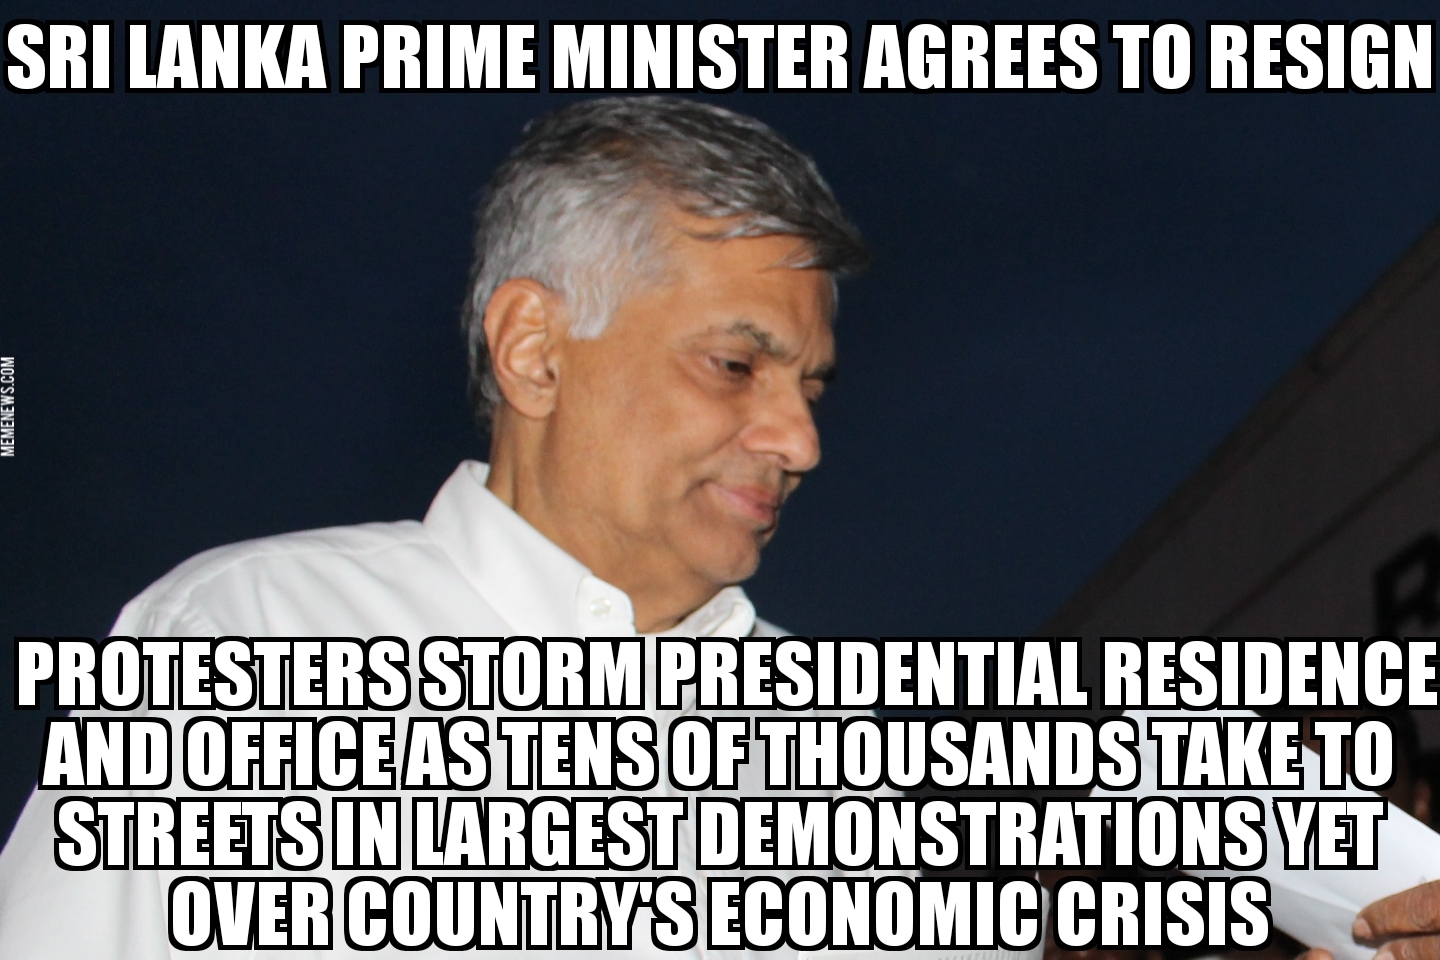 Sri Lanka PM resigning amid crisis